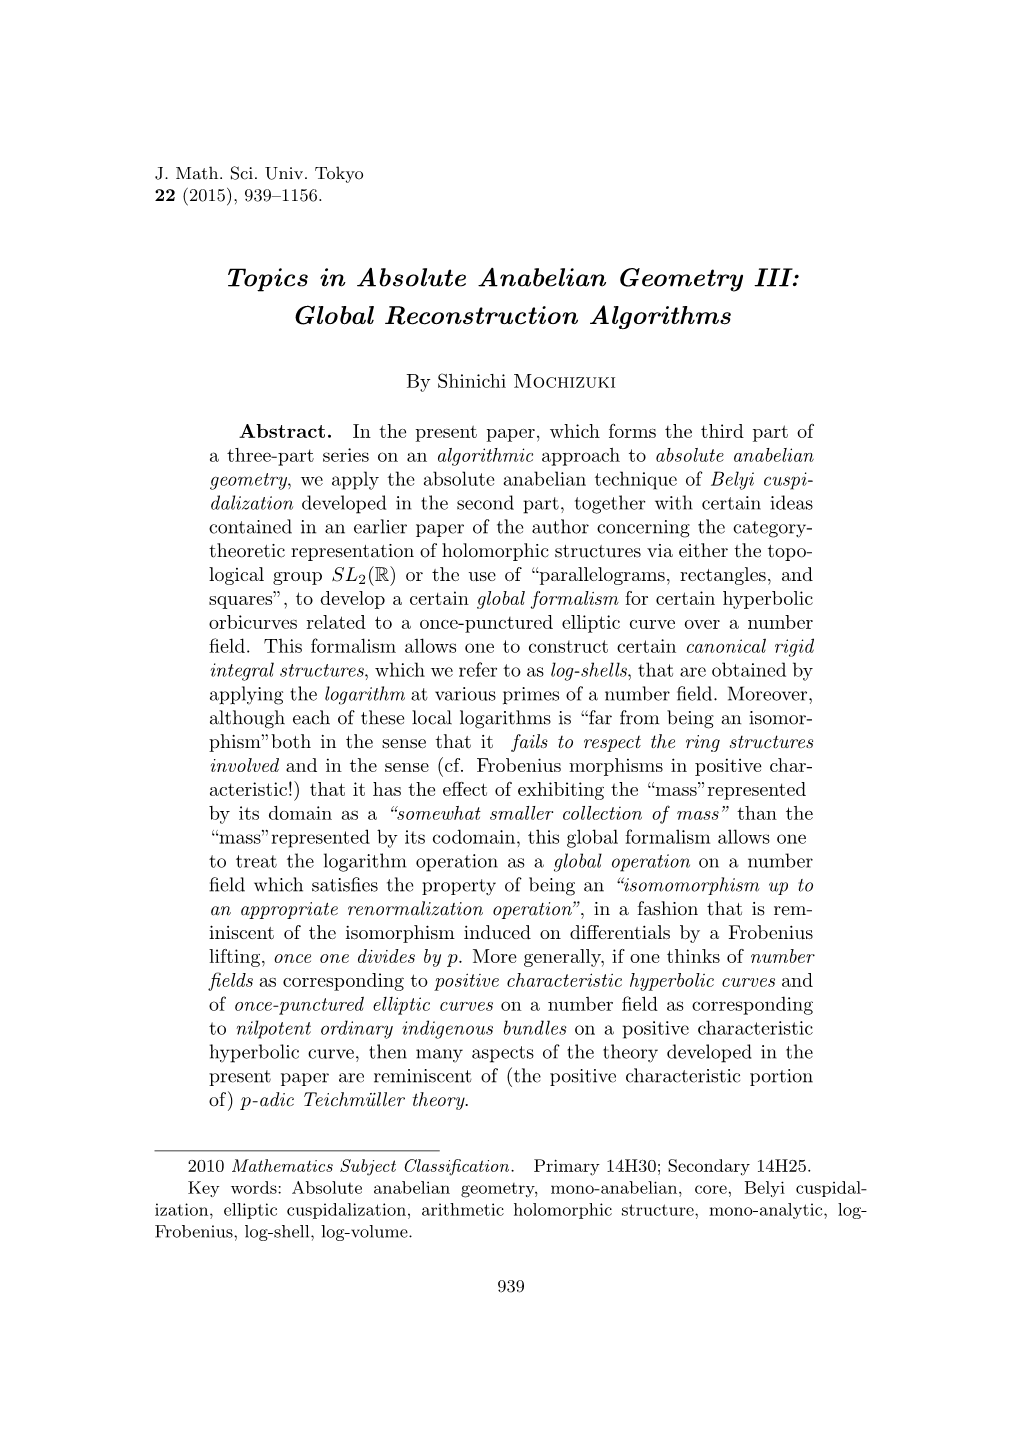 Topics in Absolute Anabelian Geometry III: Global Reconstruction Algorithms